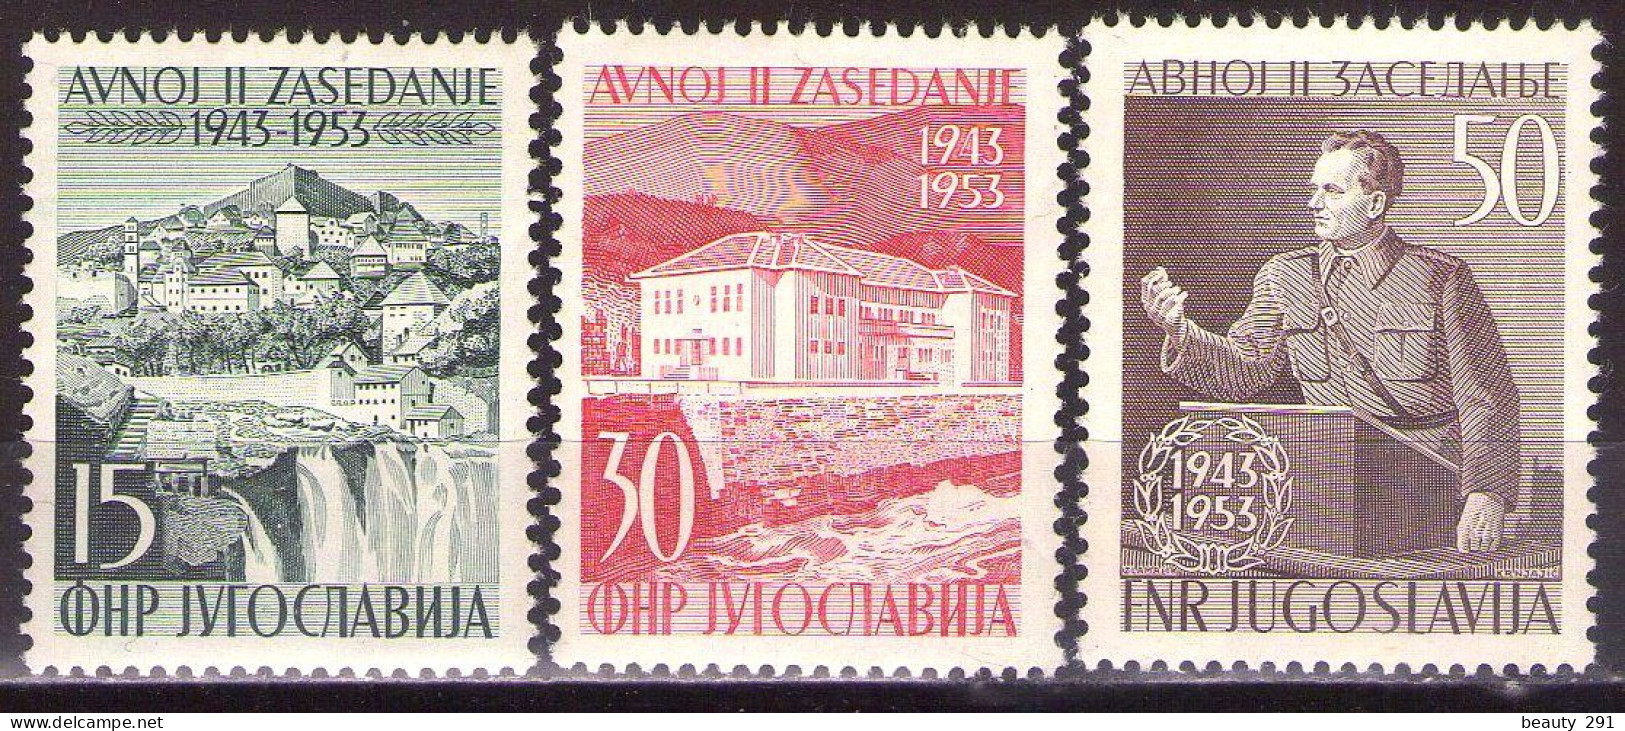 Yugoslavia 1953 -1st Republican Legislative Assembly AVNOJ II  - Mi 735-737 - MNH**VF - Nuovi